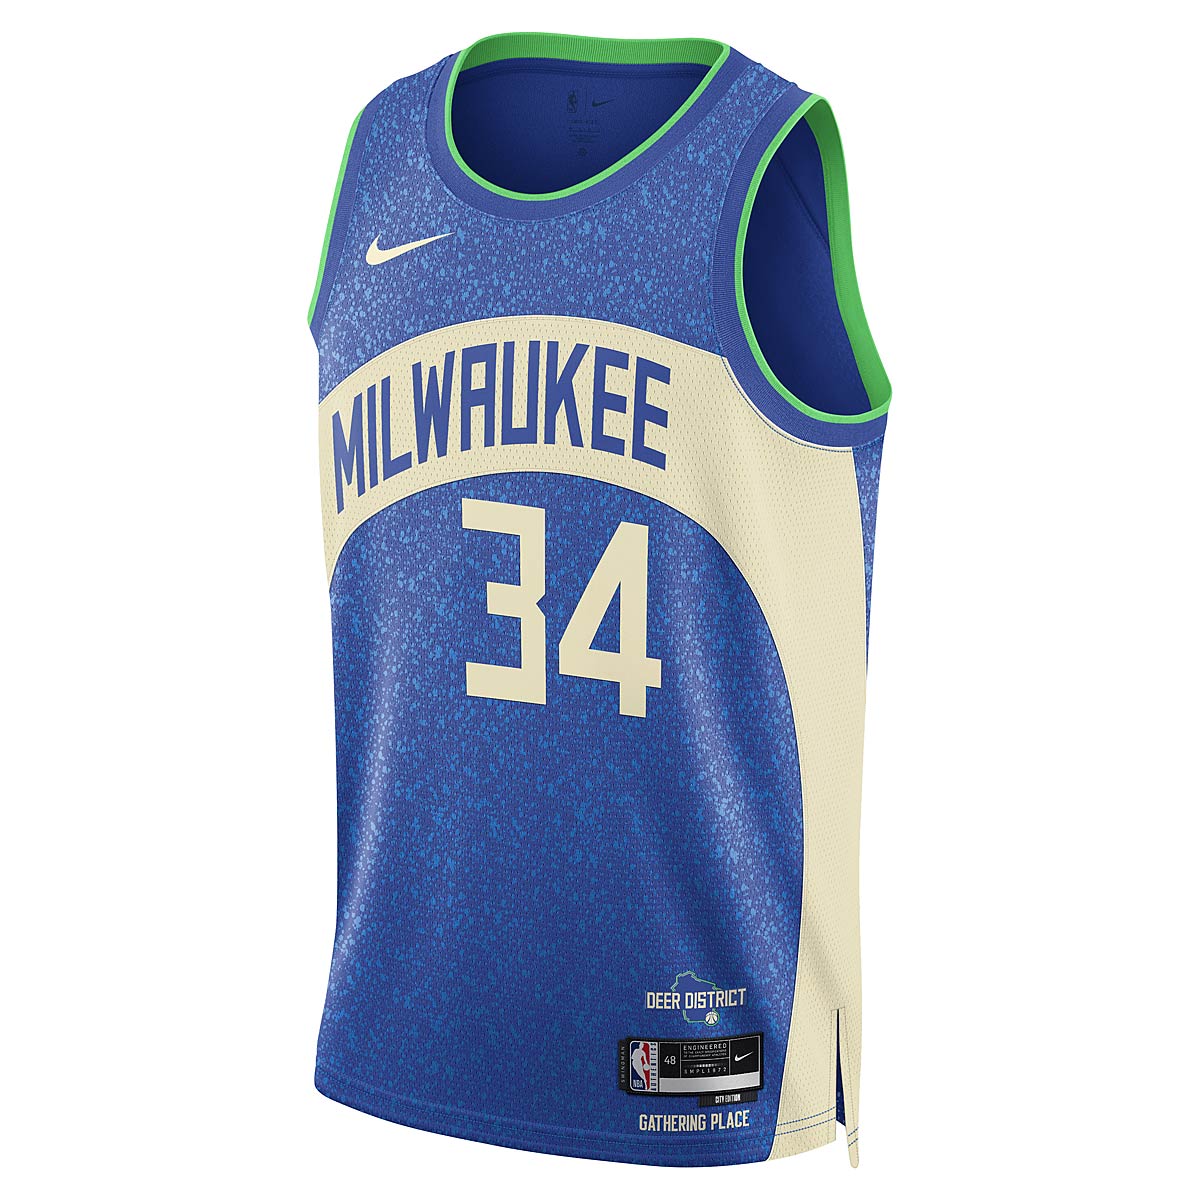 Nike NBA Milwaukee Bucks Dri-fit City Edition Swingman Jersey Giannis Antetokounmpo, Photo Blau/schwarz-weiß-university Rot S